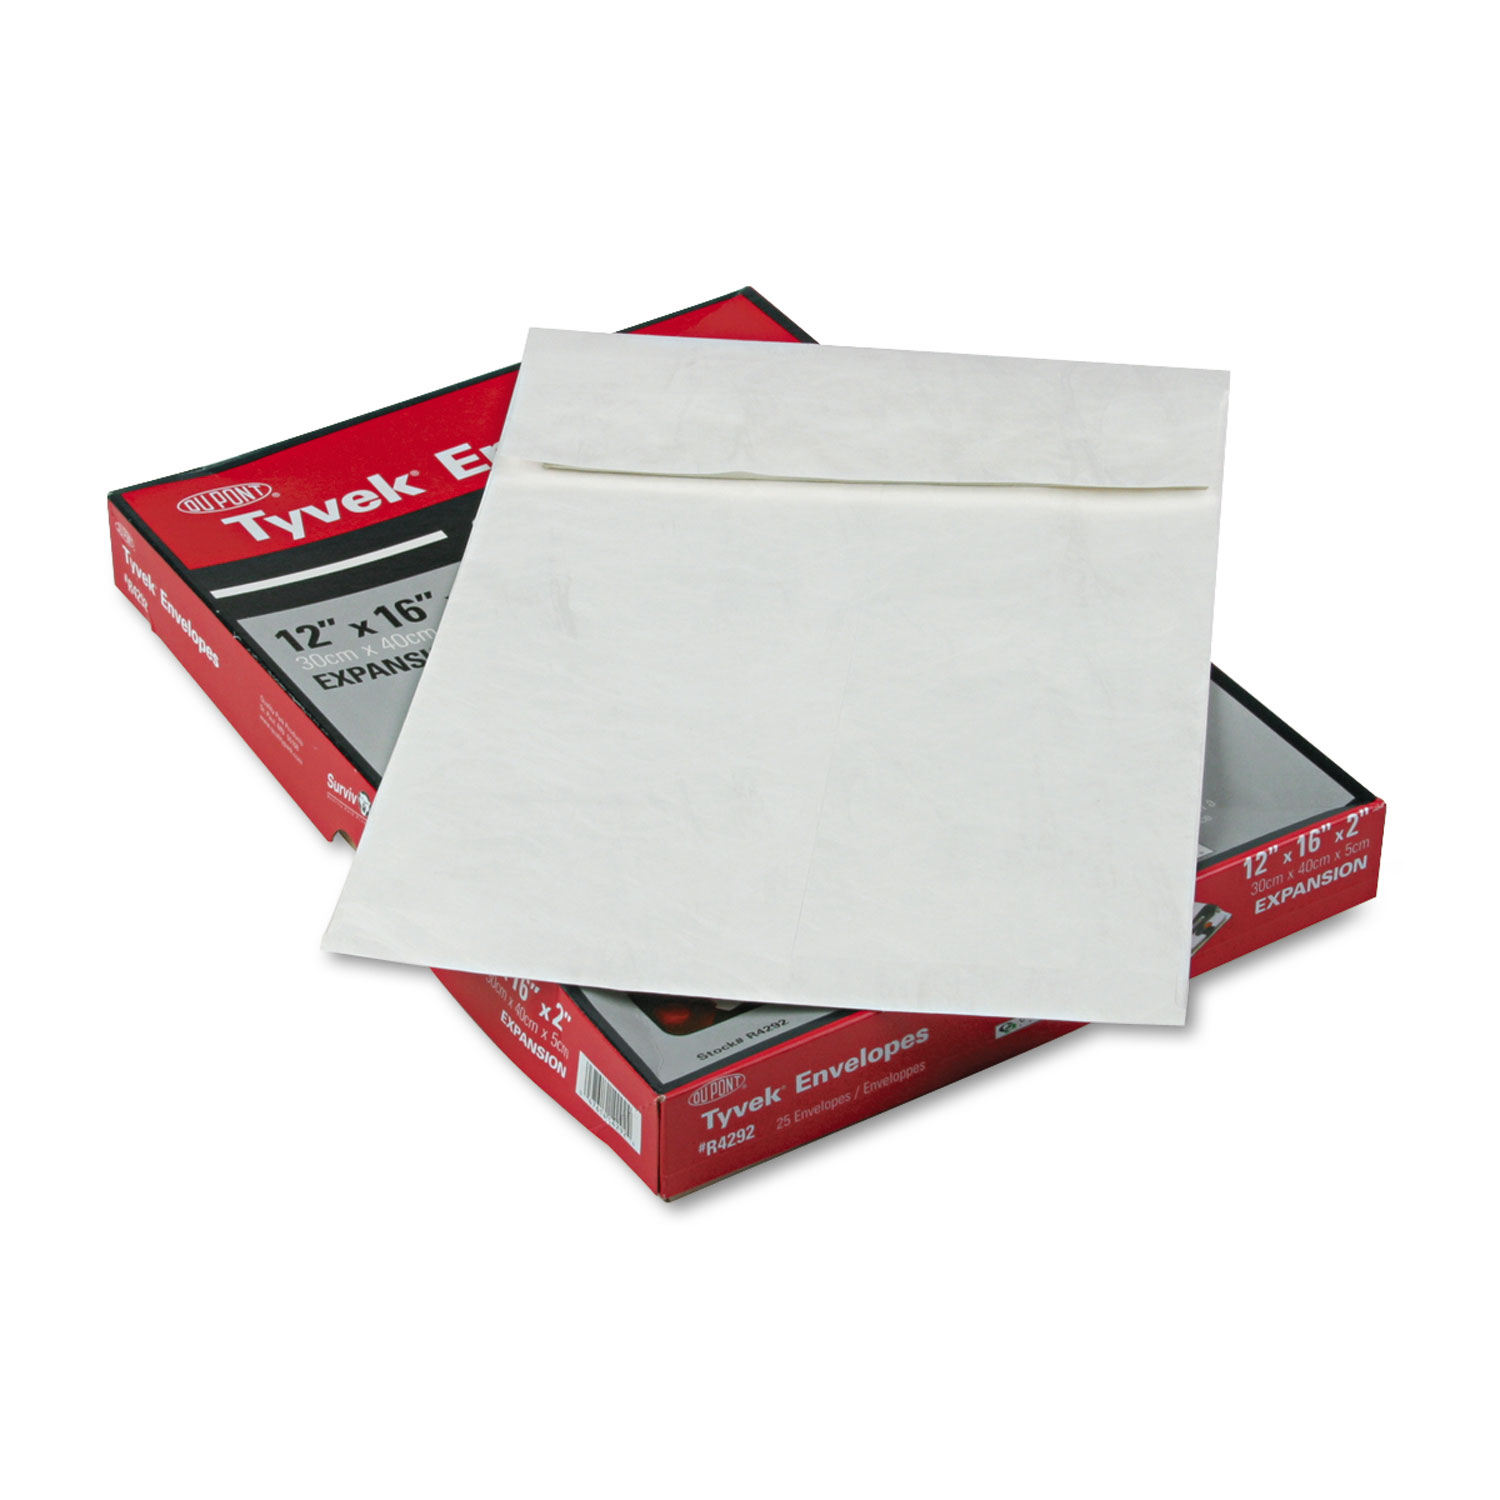  Survivor QUAR4292 Open End Expansion Mailers, DuPont Tyvek, #15 1/2, Cheese Blade Flap, Self-Adhesive Closure, 12 x 16, White, 25/Box (QUAR4292) 